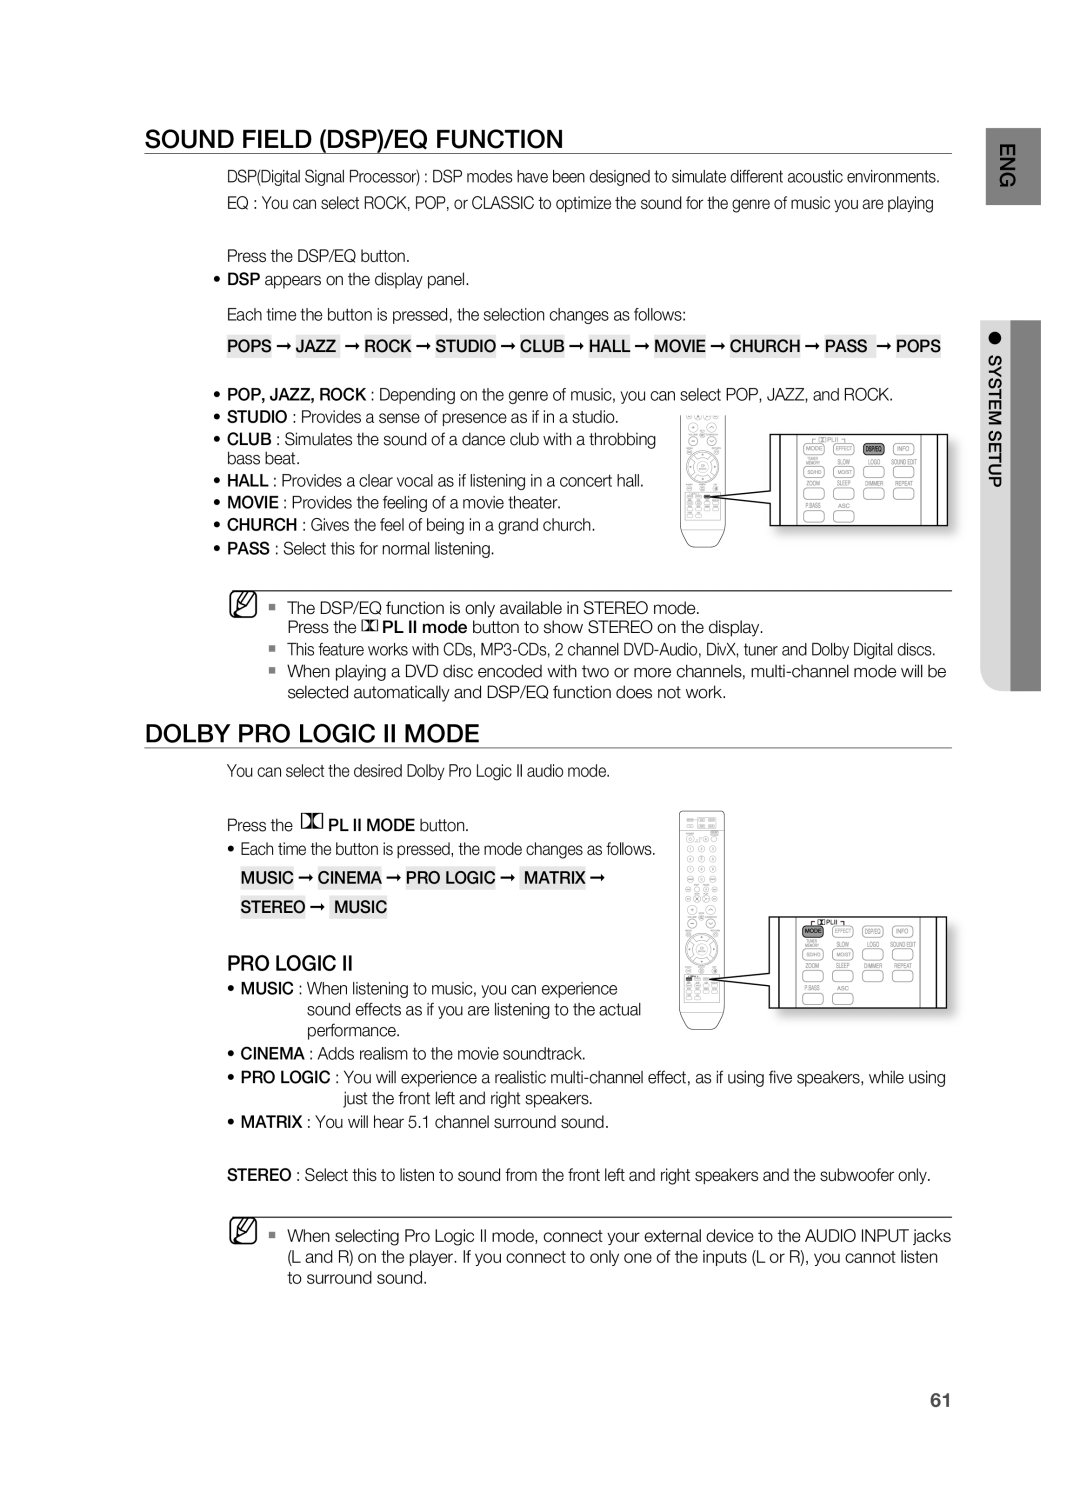 Samsung HT-TZ515 user manual Sound Field Dsp/Eq Function, DOLBY PrO LOgIC II MODE 